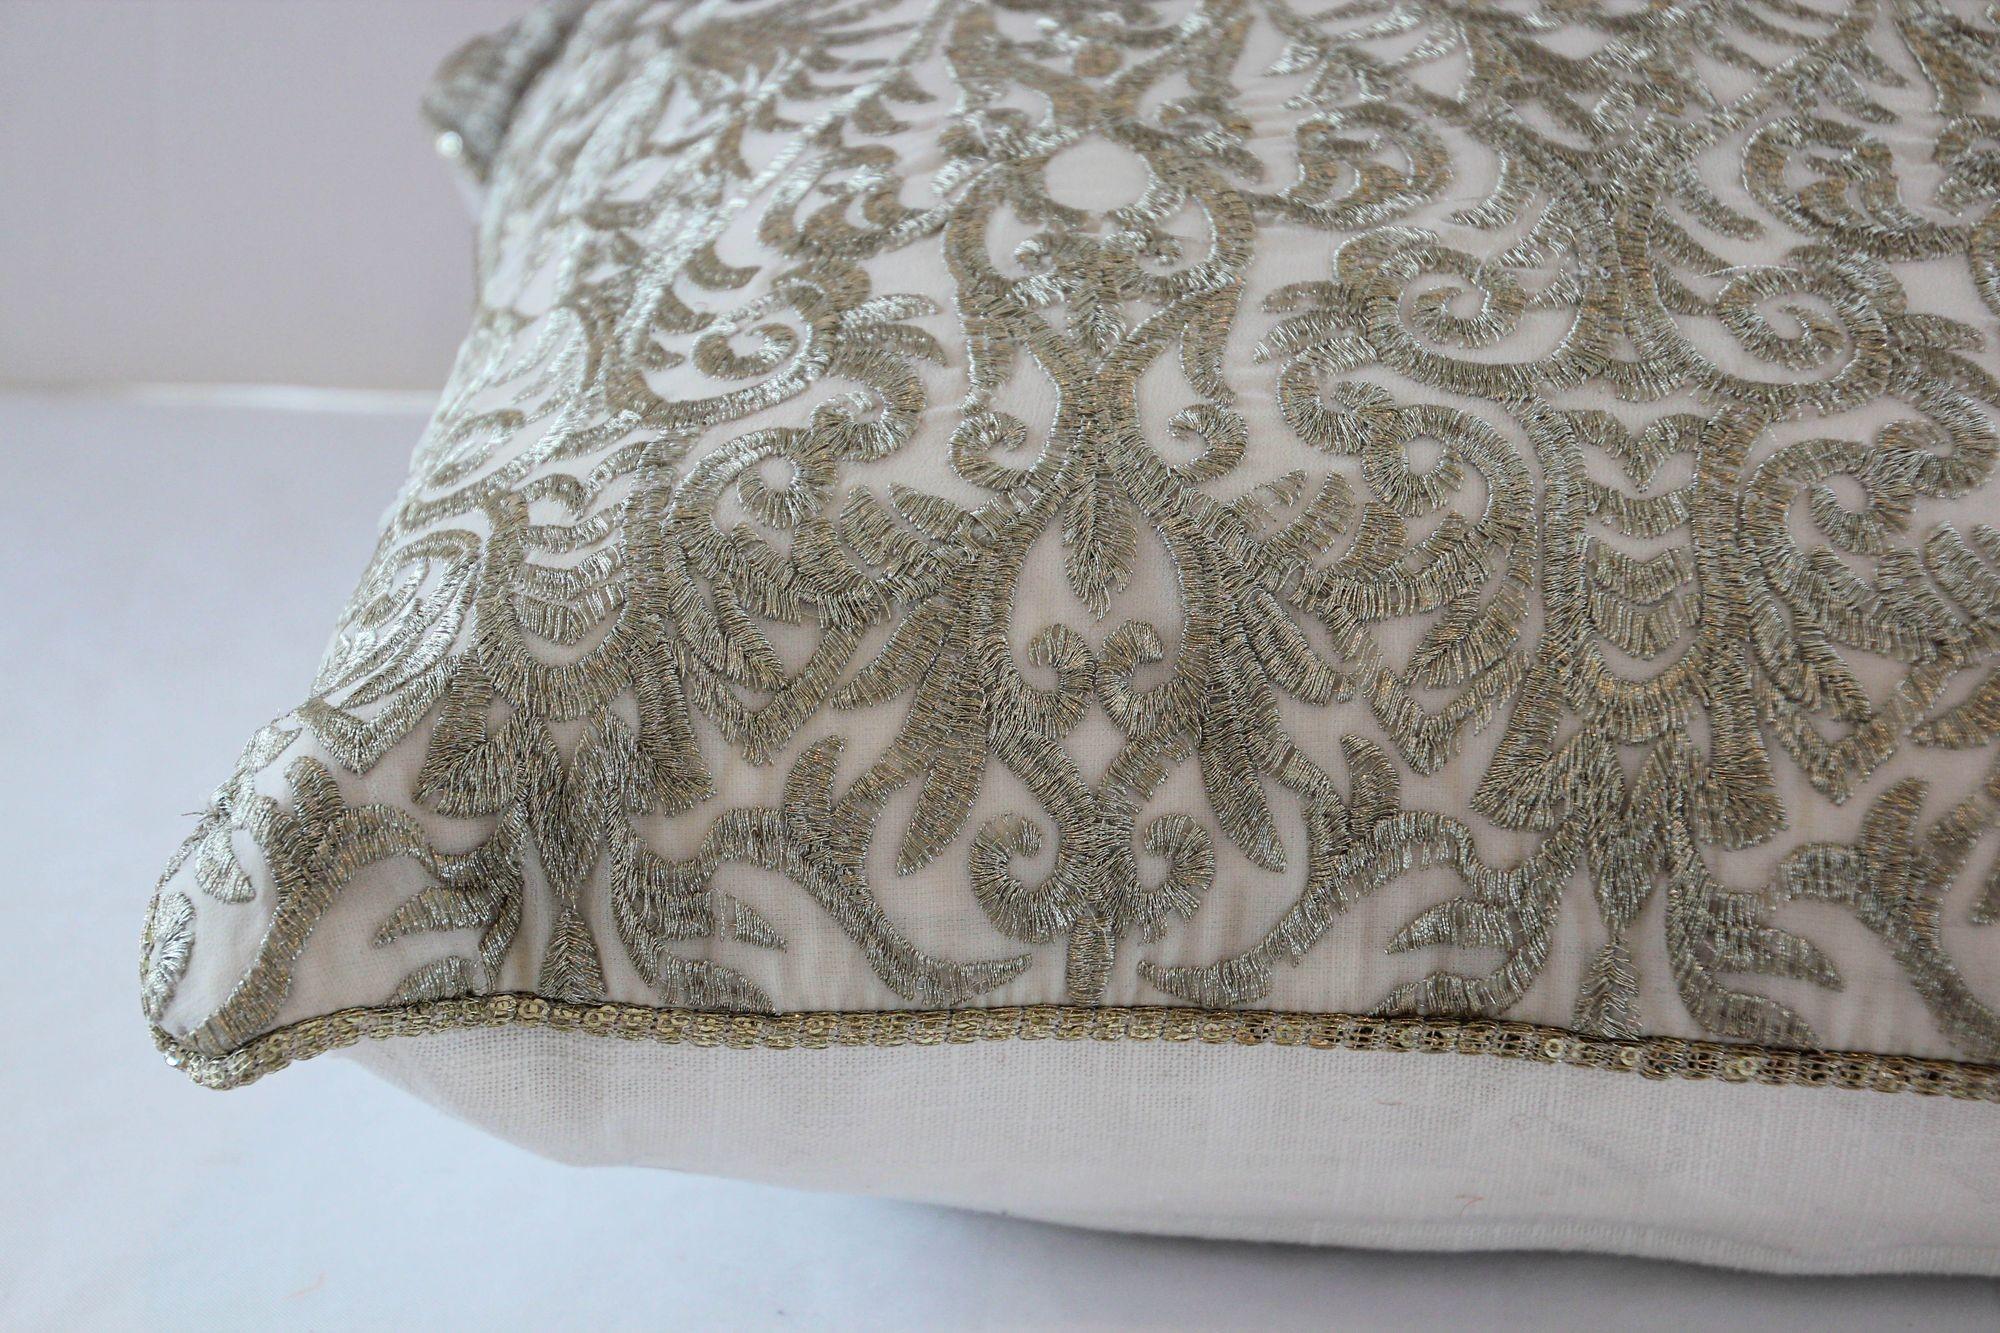 Turkish Moorish Ottoman Style Throw Pillow with Silver Metallic Embroidery For Sale 5